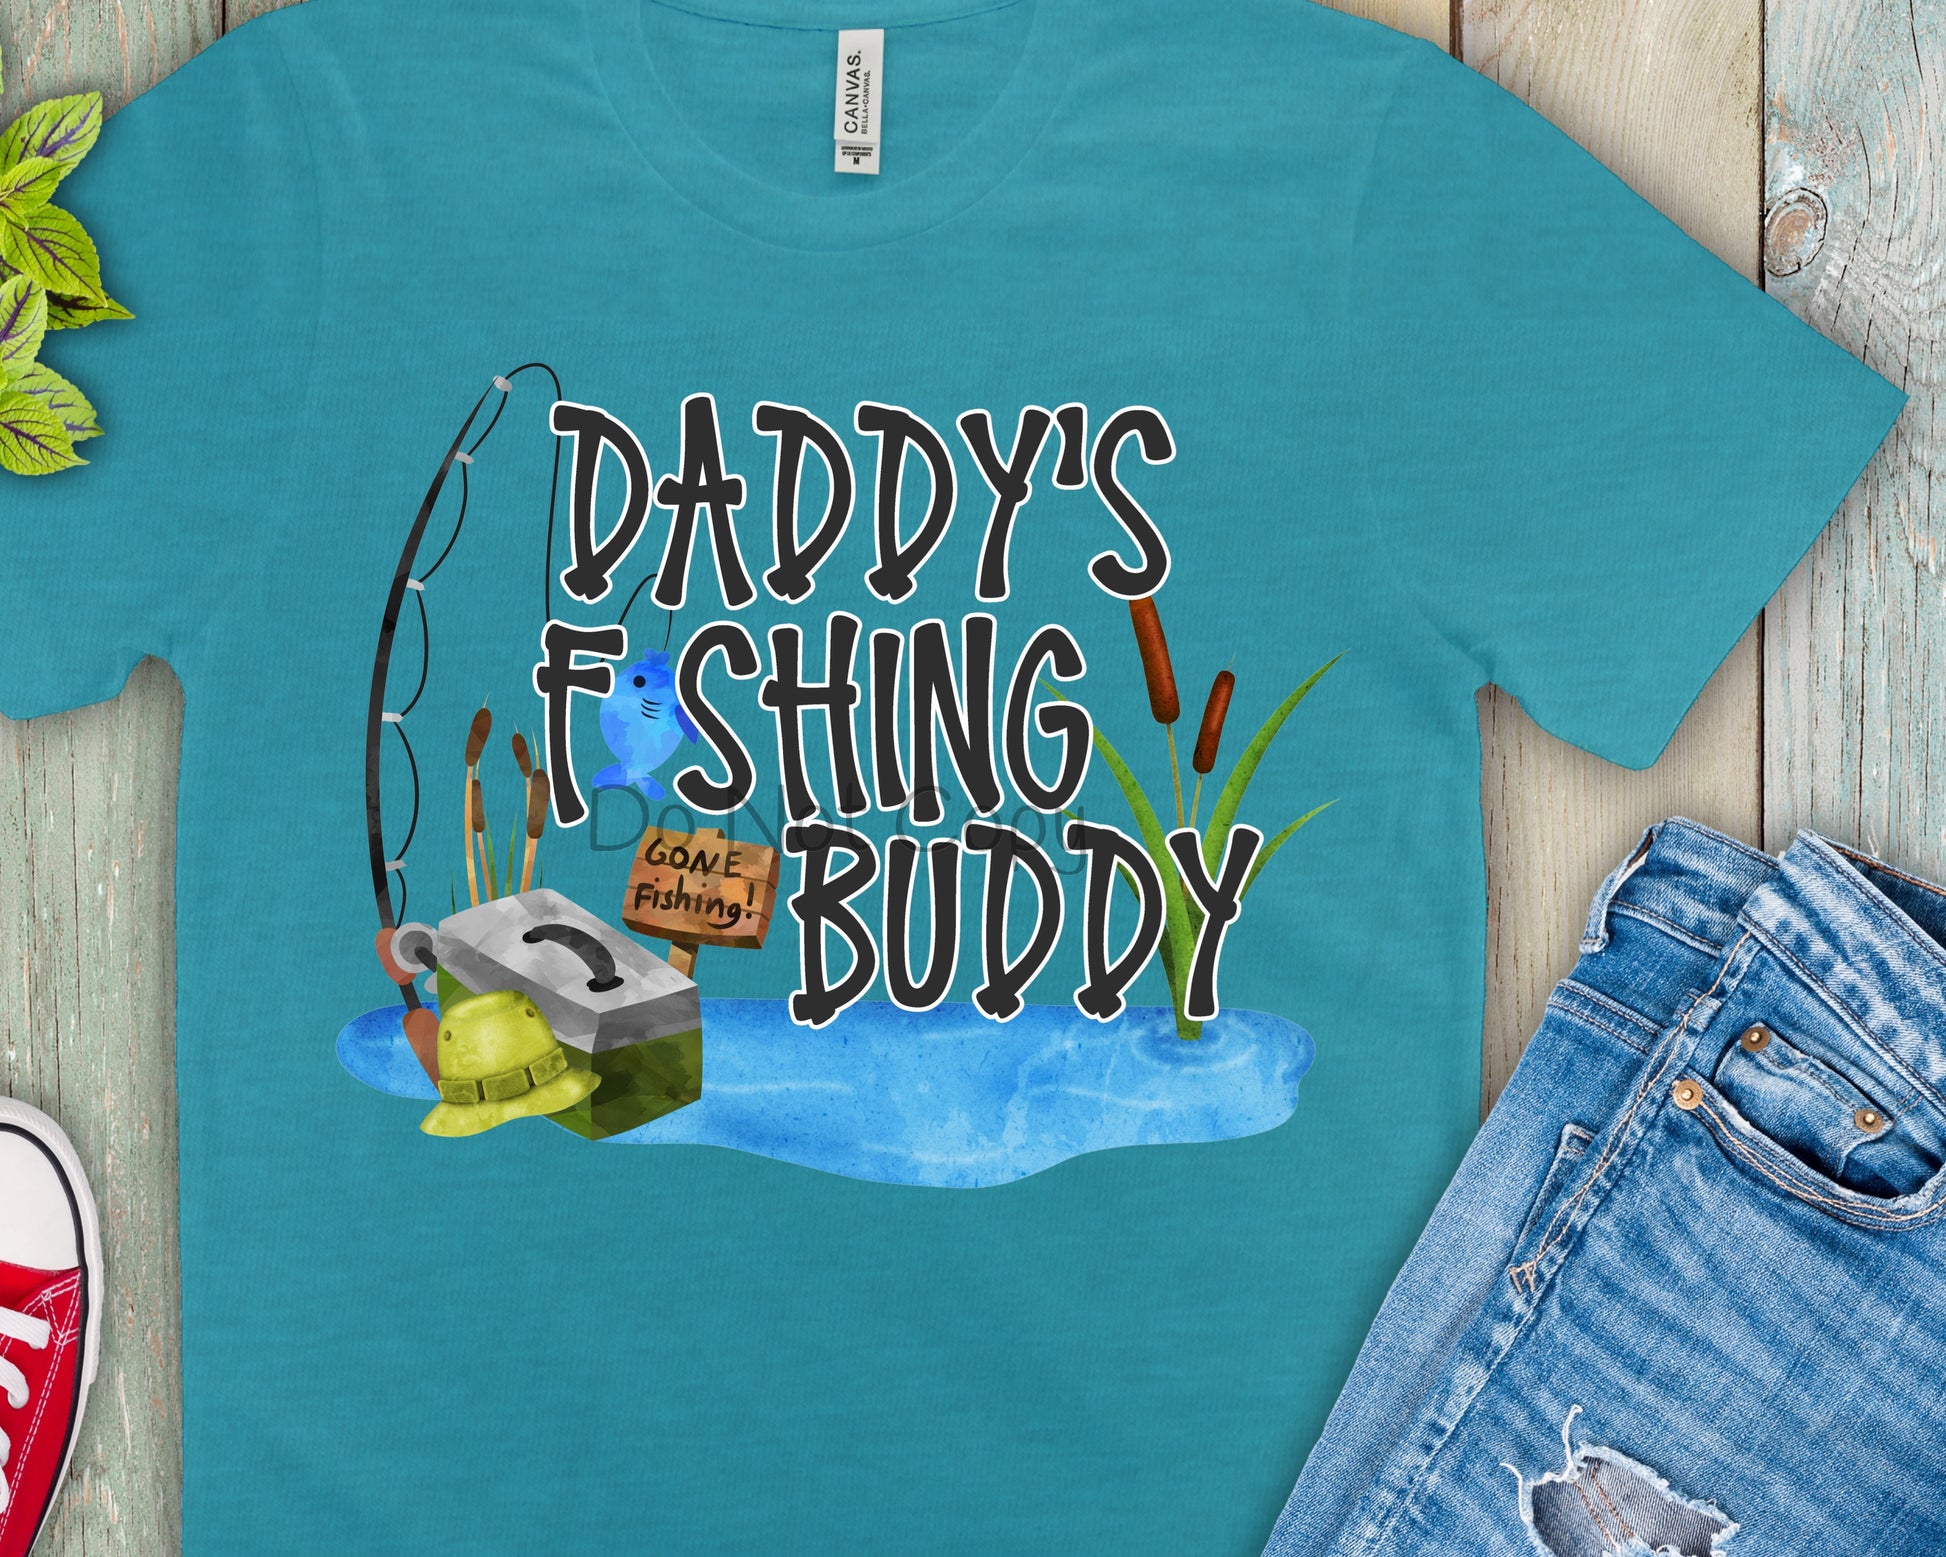 Daddy's fishing buddy